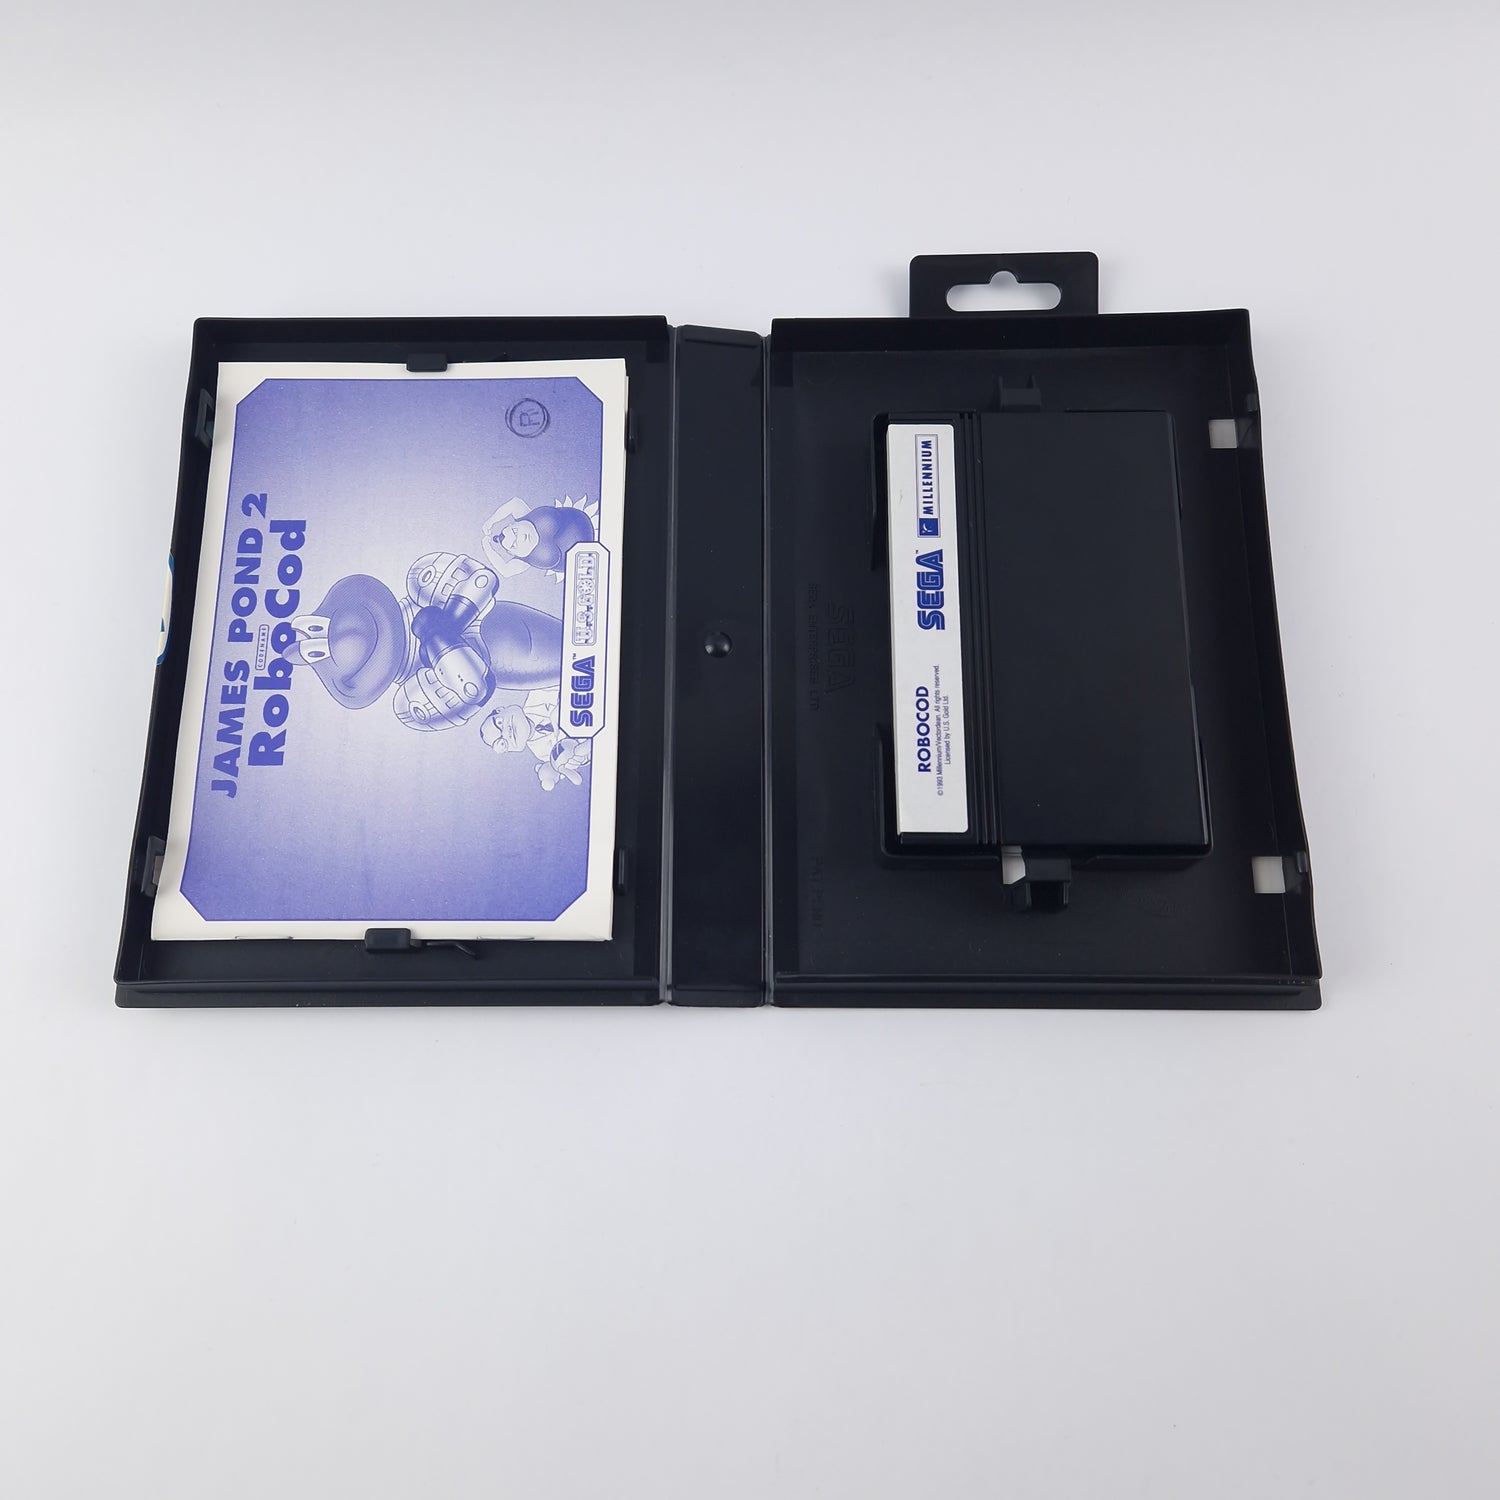 Sega Master System Game: James Pond 2 Codename Robocod - OVP PAL - Very Good